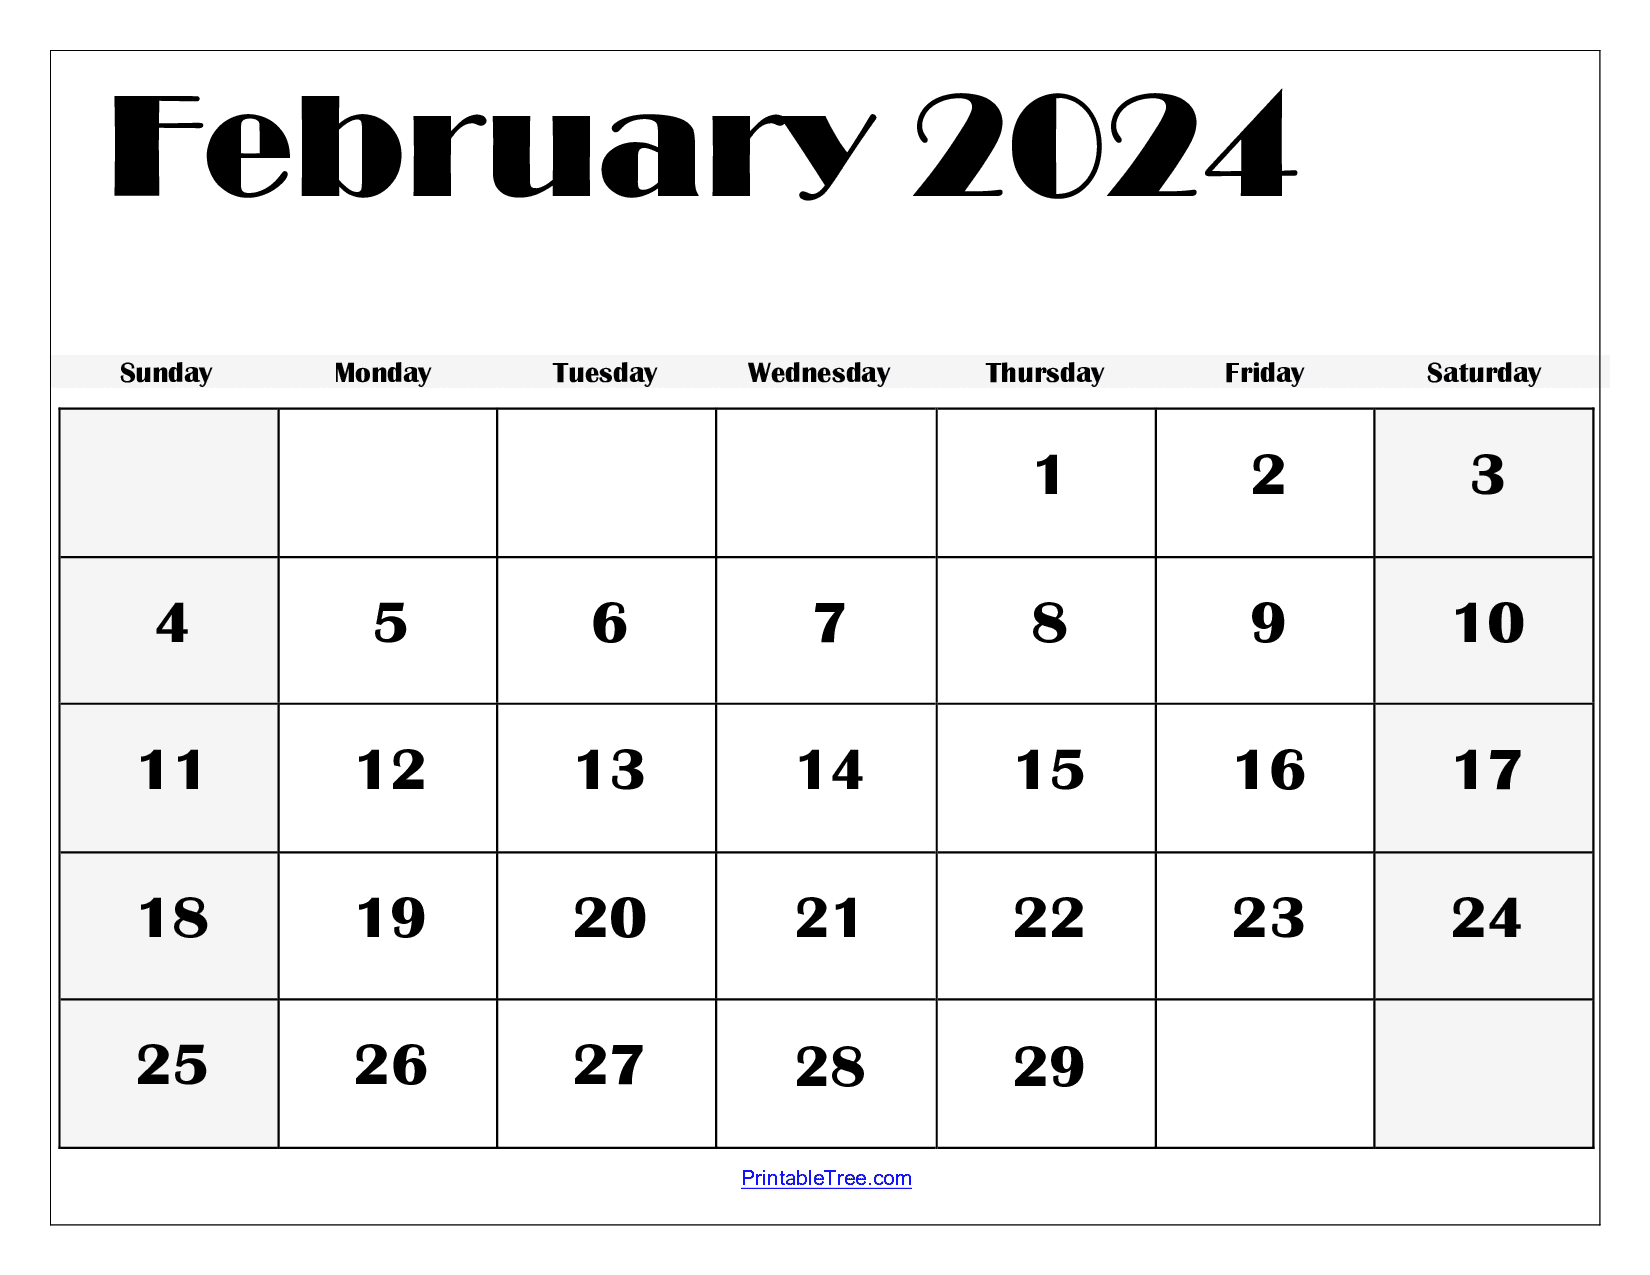 February 2024 Calendar Printable Pdf Template With Holidays for February 2024 Calendar Printable Free